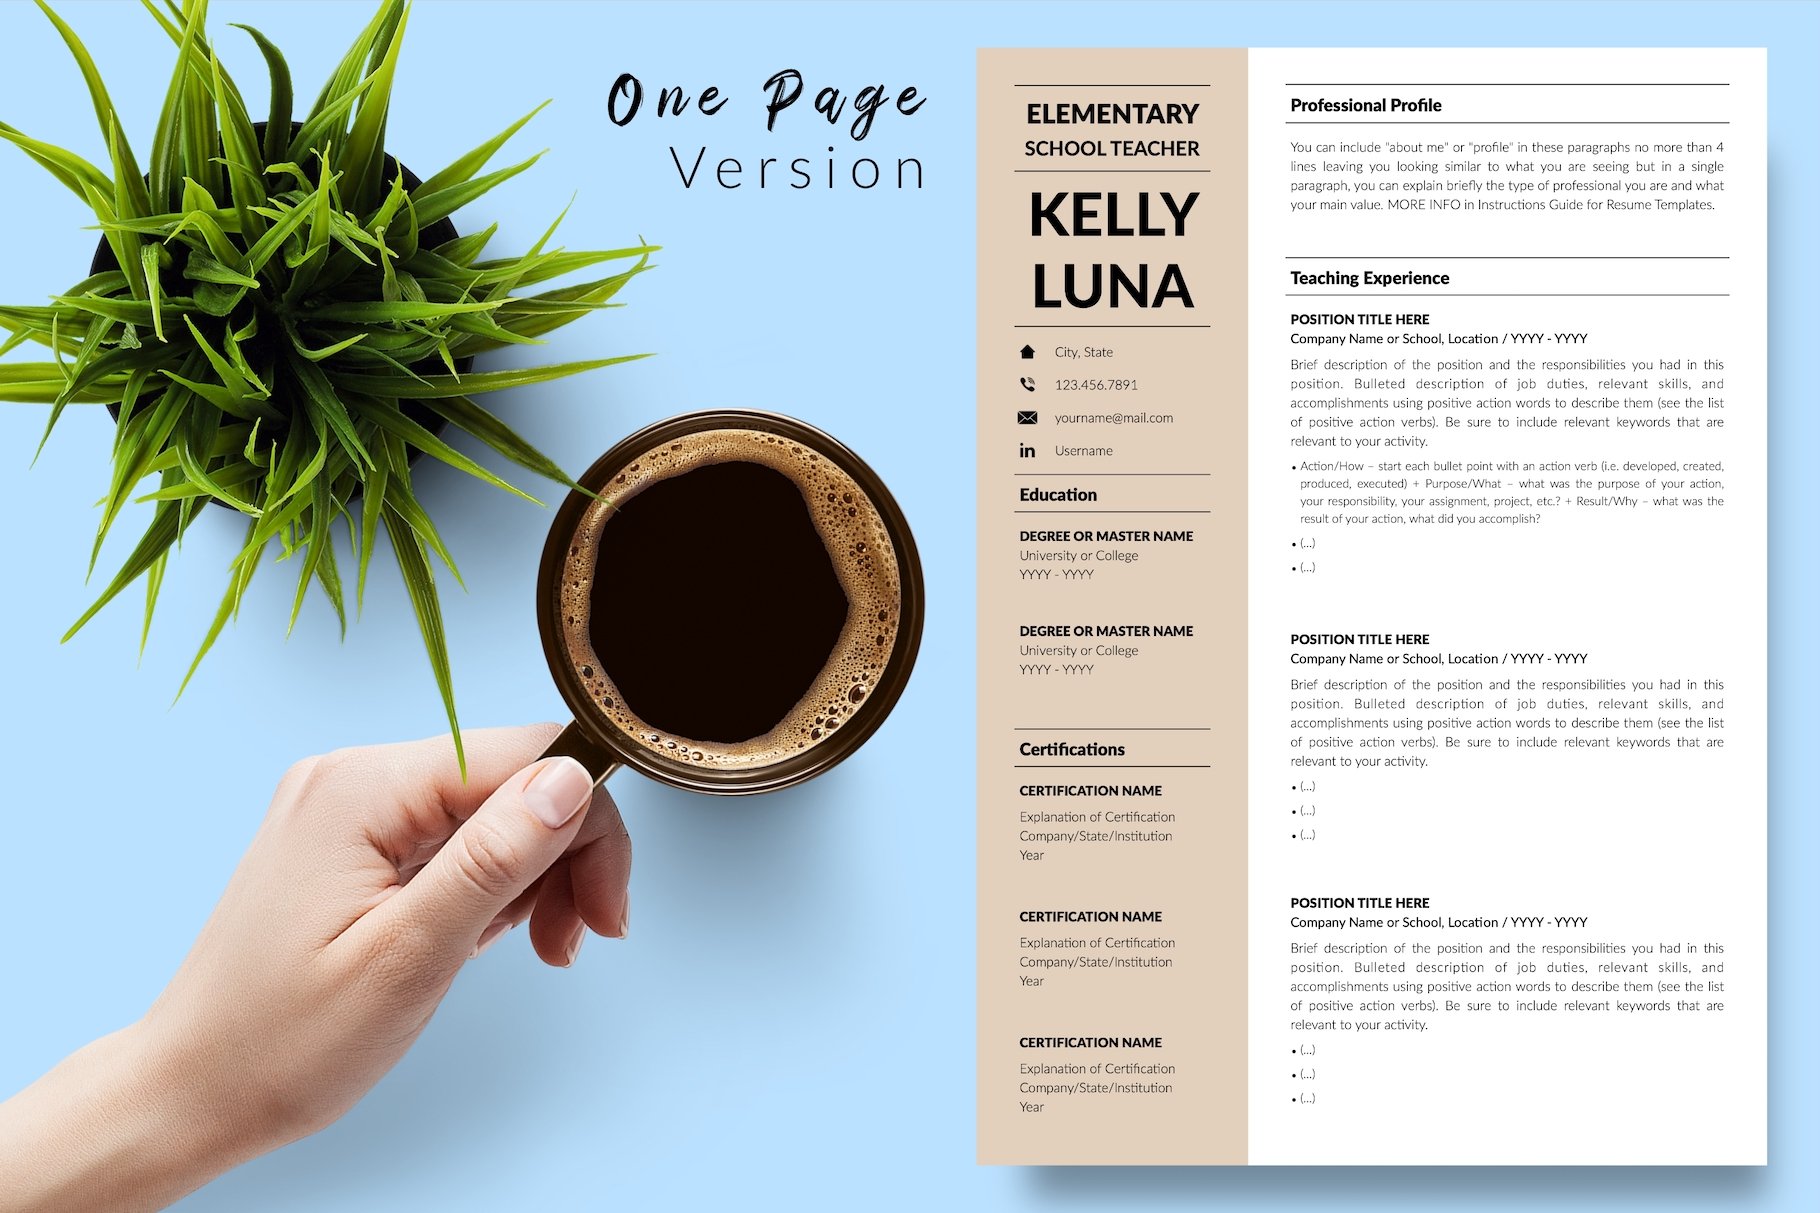 Teacher CV Design / Resume - Kelly preview image.